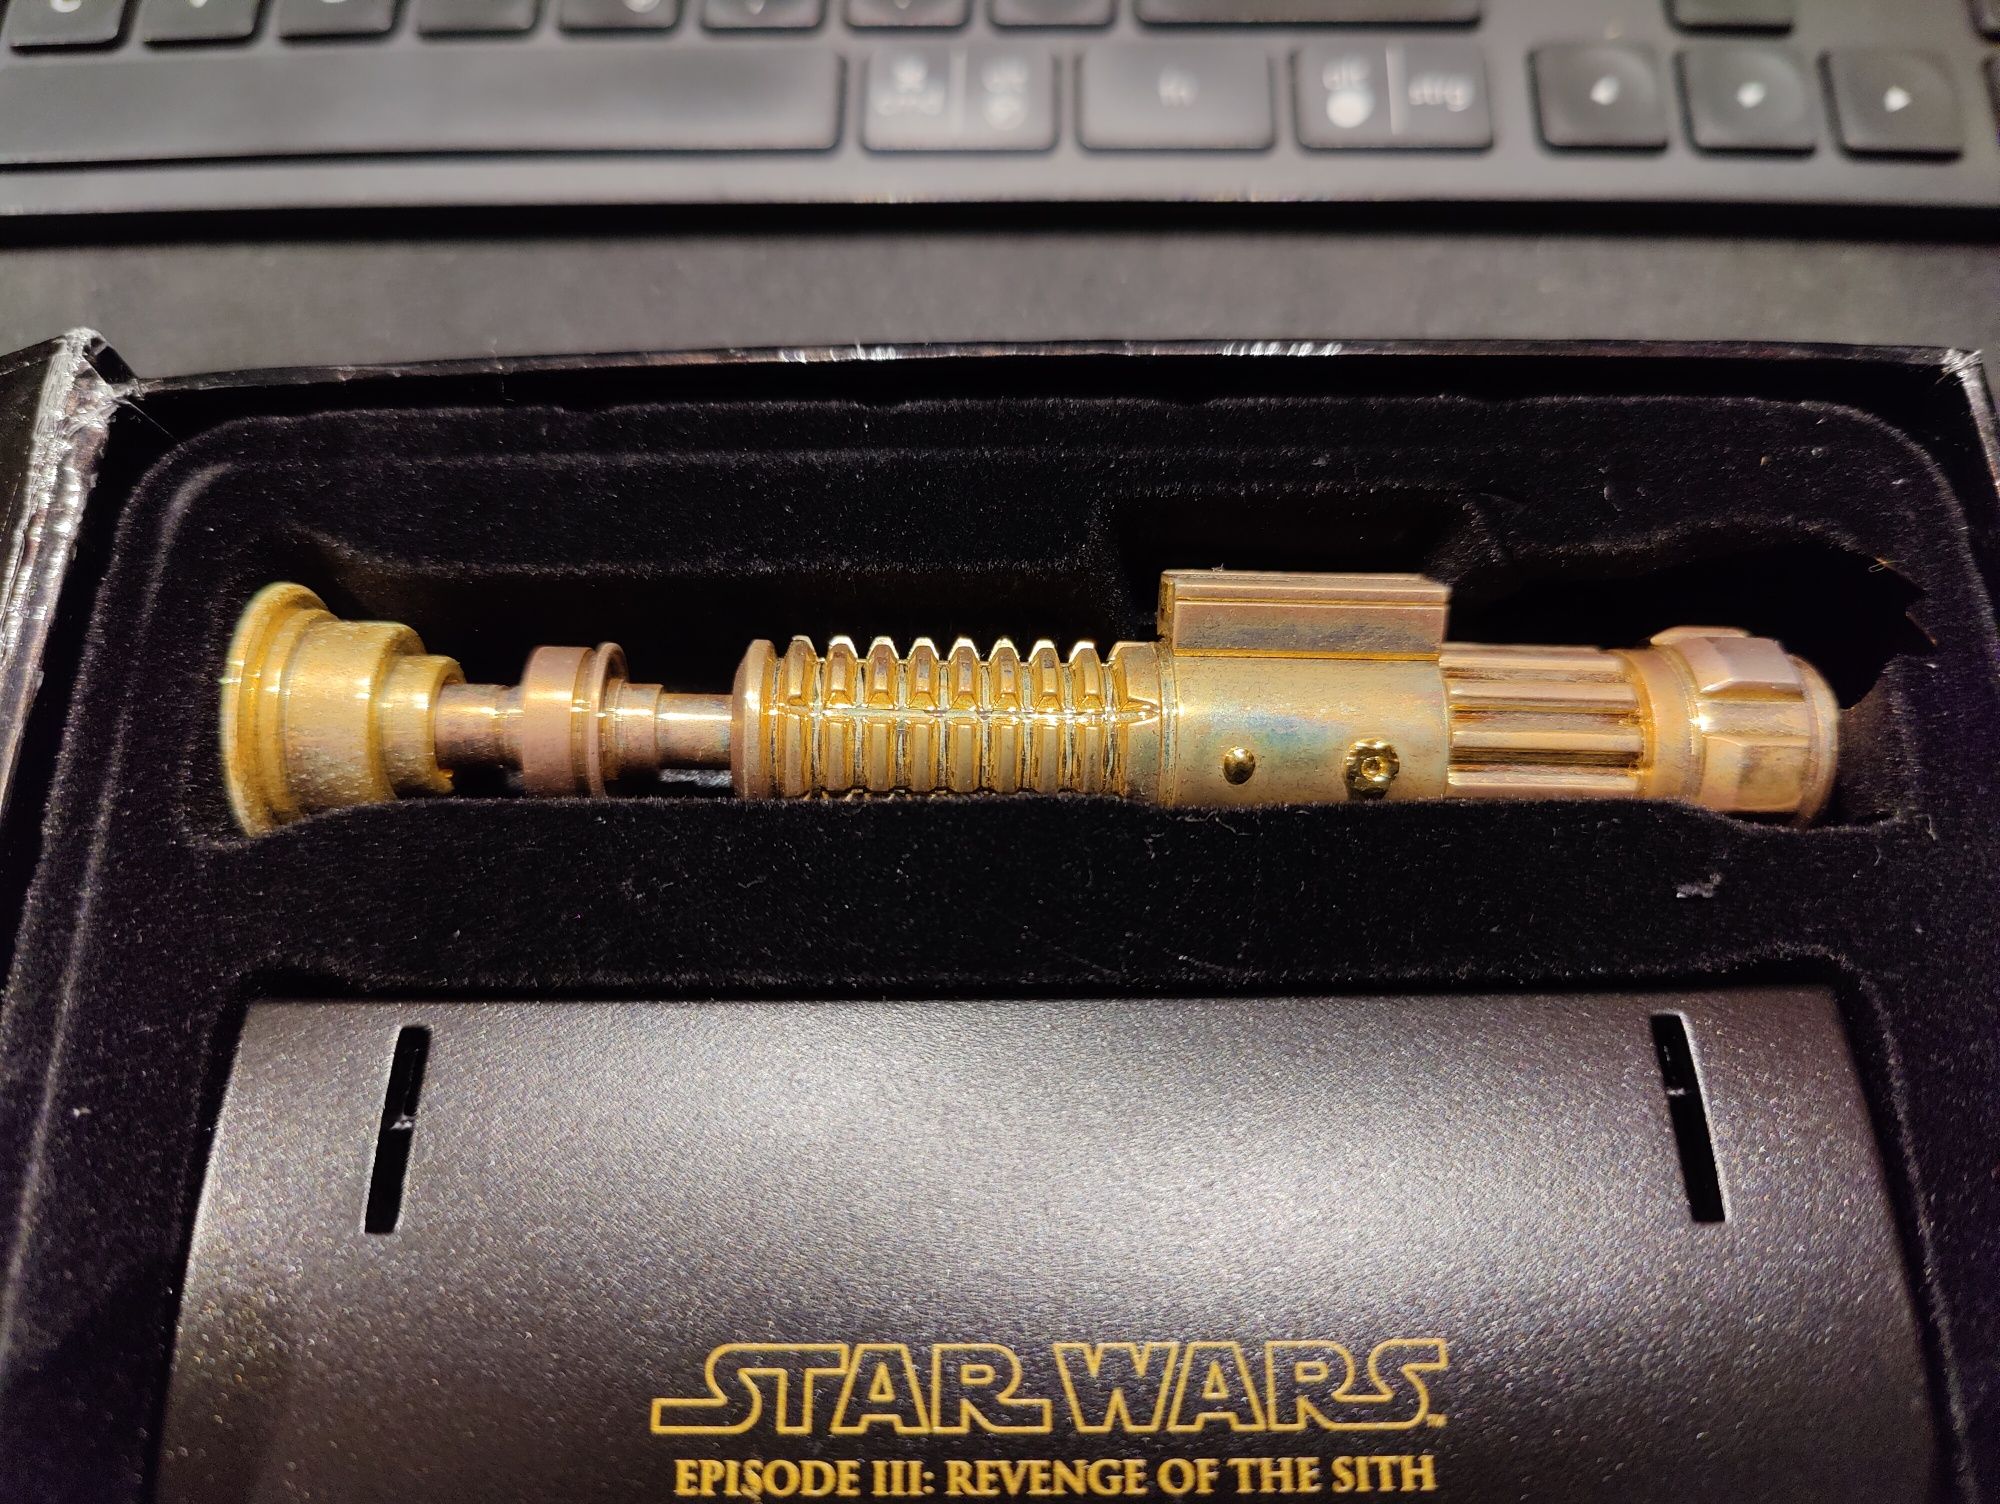 Obi-Wan Kenobi Master Replicas 0.45 Lightsaber (Gold)